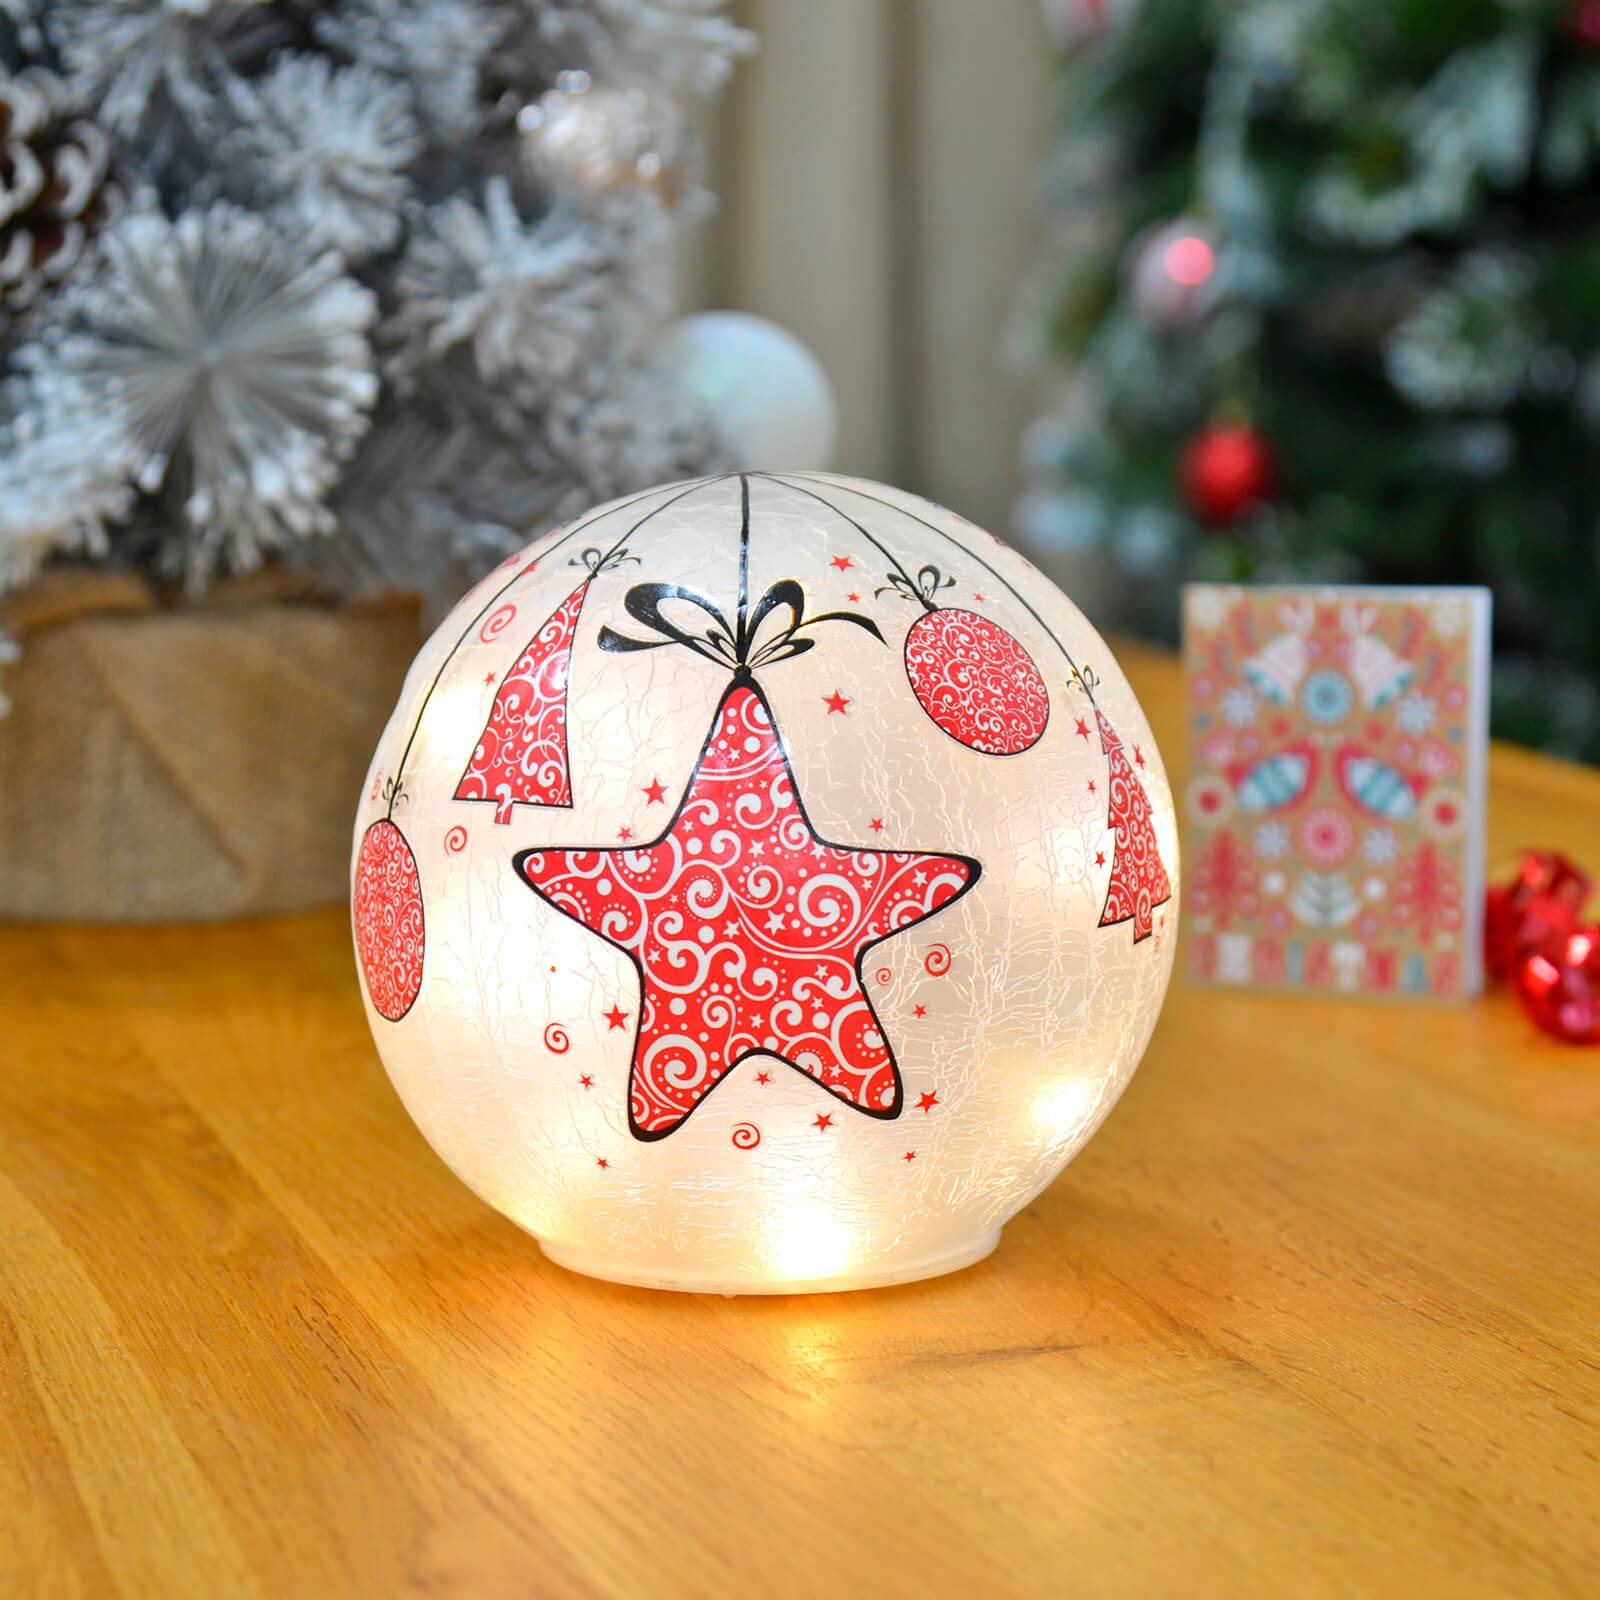 Mr Crimbo Light Up Christmas Crackle Ball Decoration LED 15cm - MrCrimbo.co.uk -XS7309 - Red Star -ball